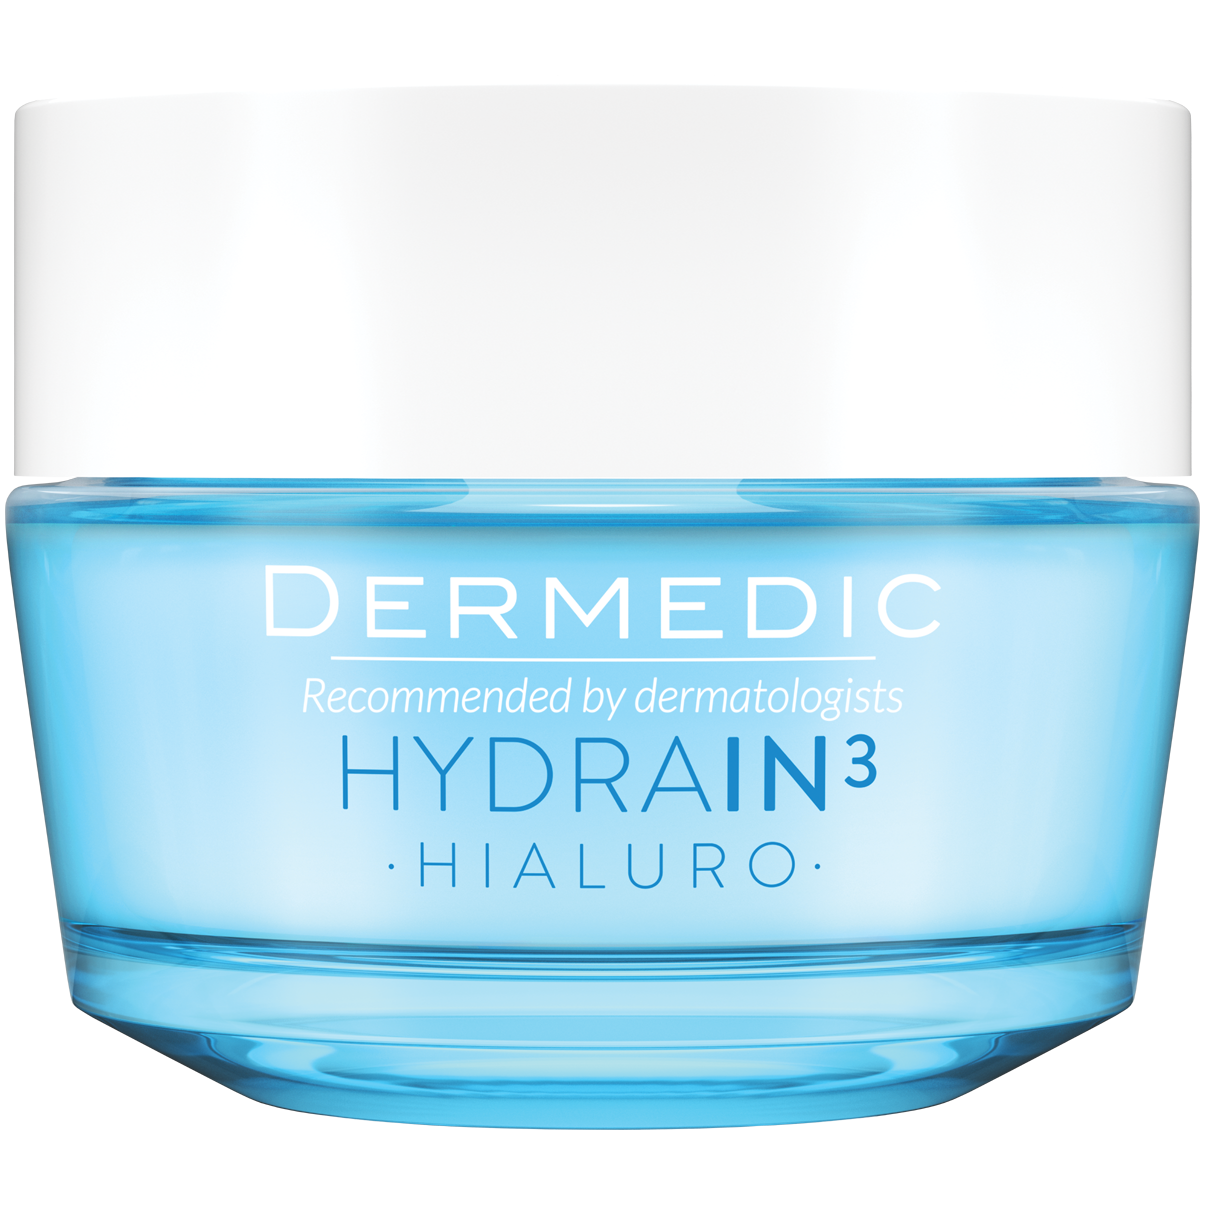 Dermedic Hydrain3 Hialuro ультраувлажняющий крем-гель для лица, 50 г dermedic hydrain3 hialuro крем для лица на ночь 50 ml